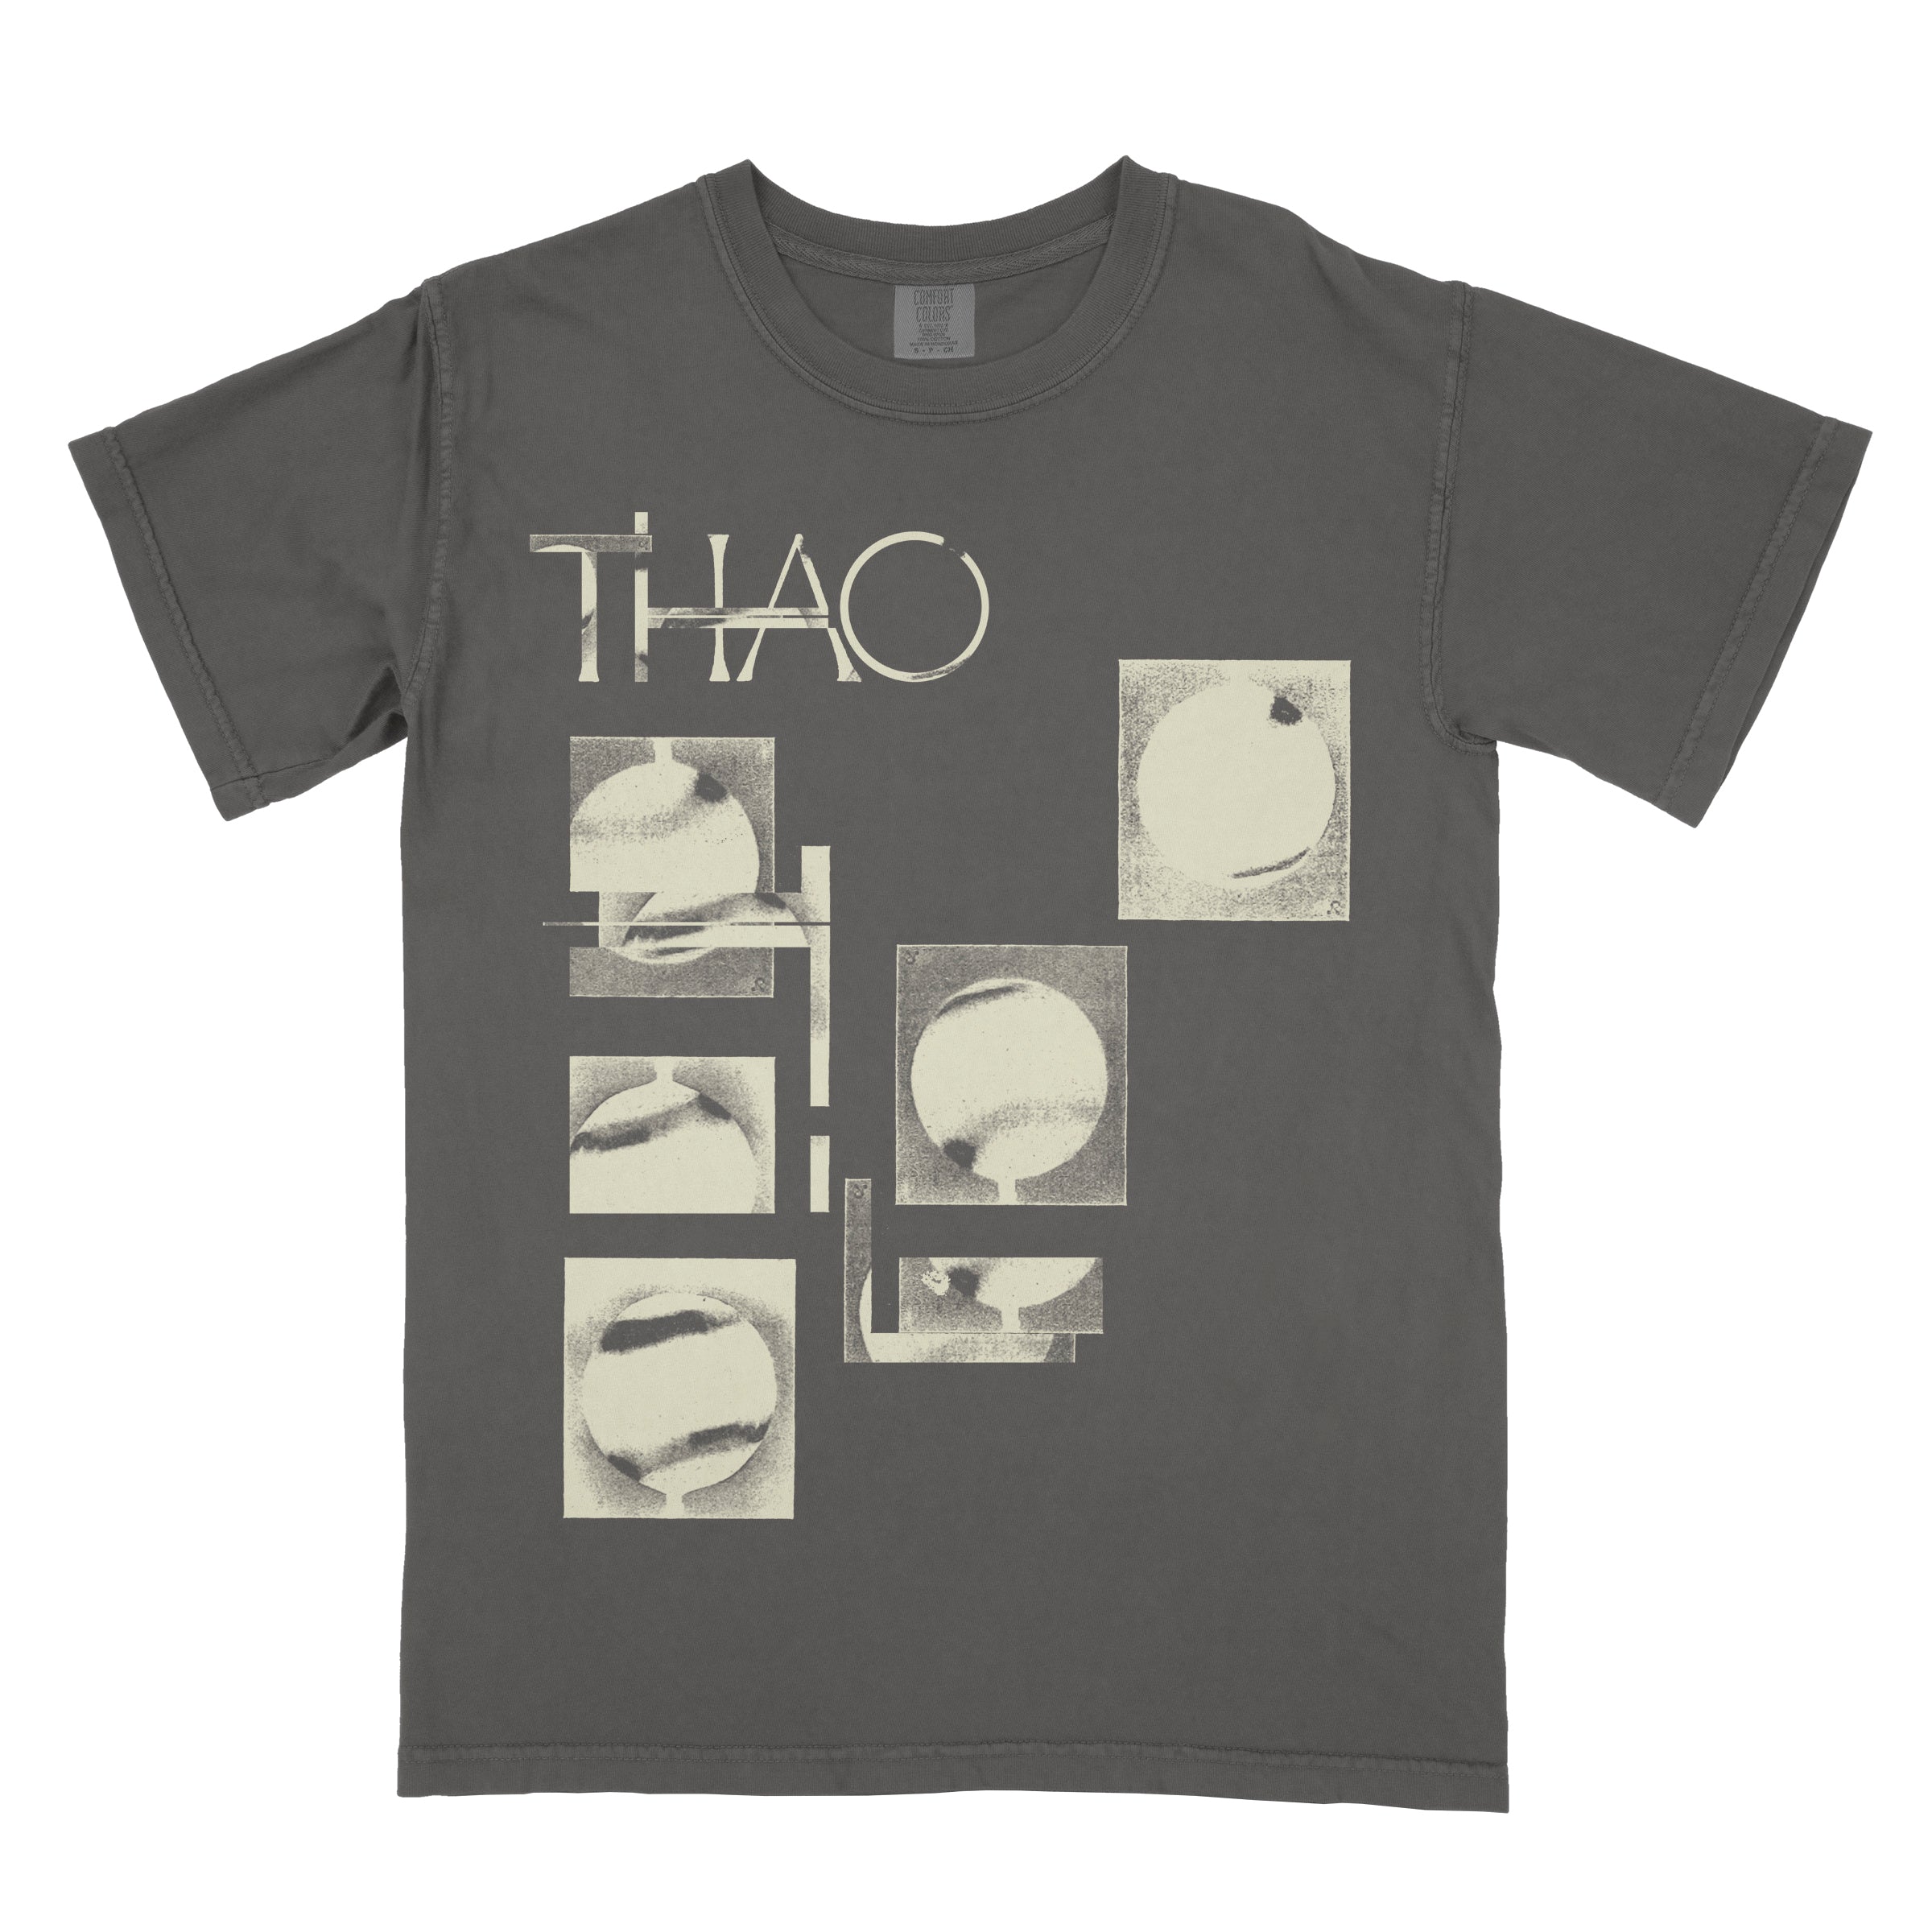 Thao "Blocks" T-Shirt